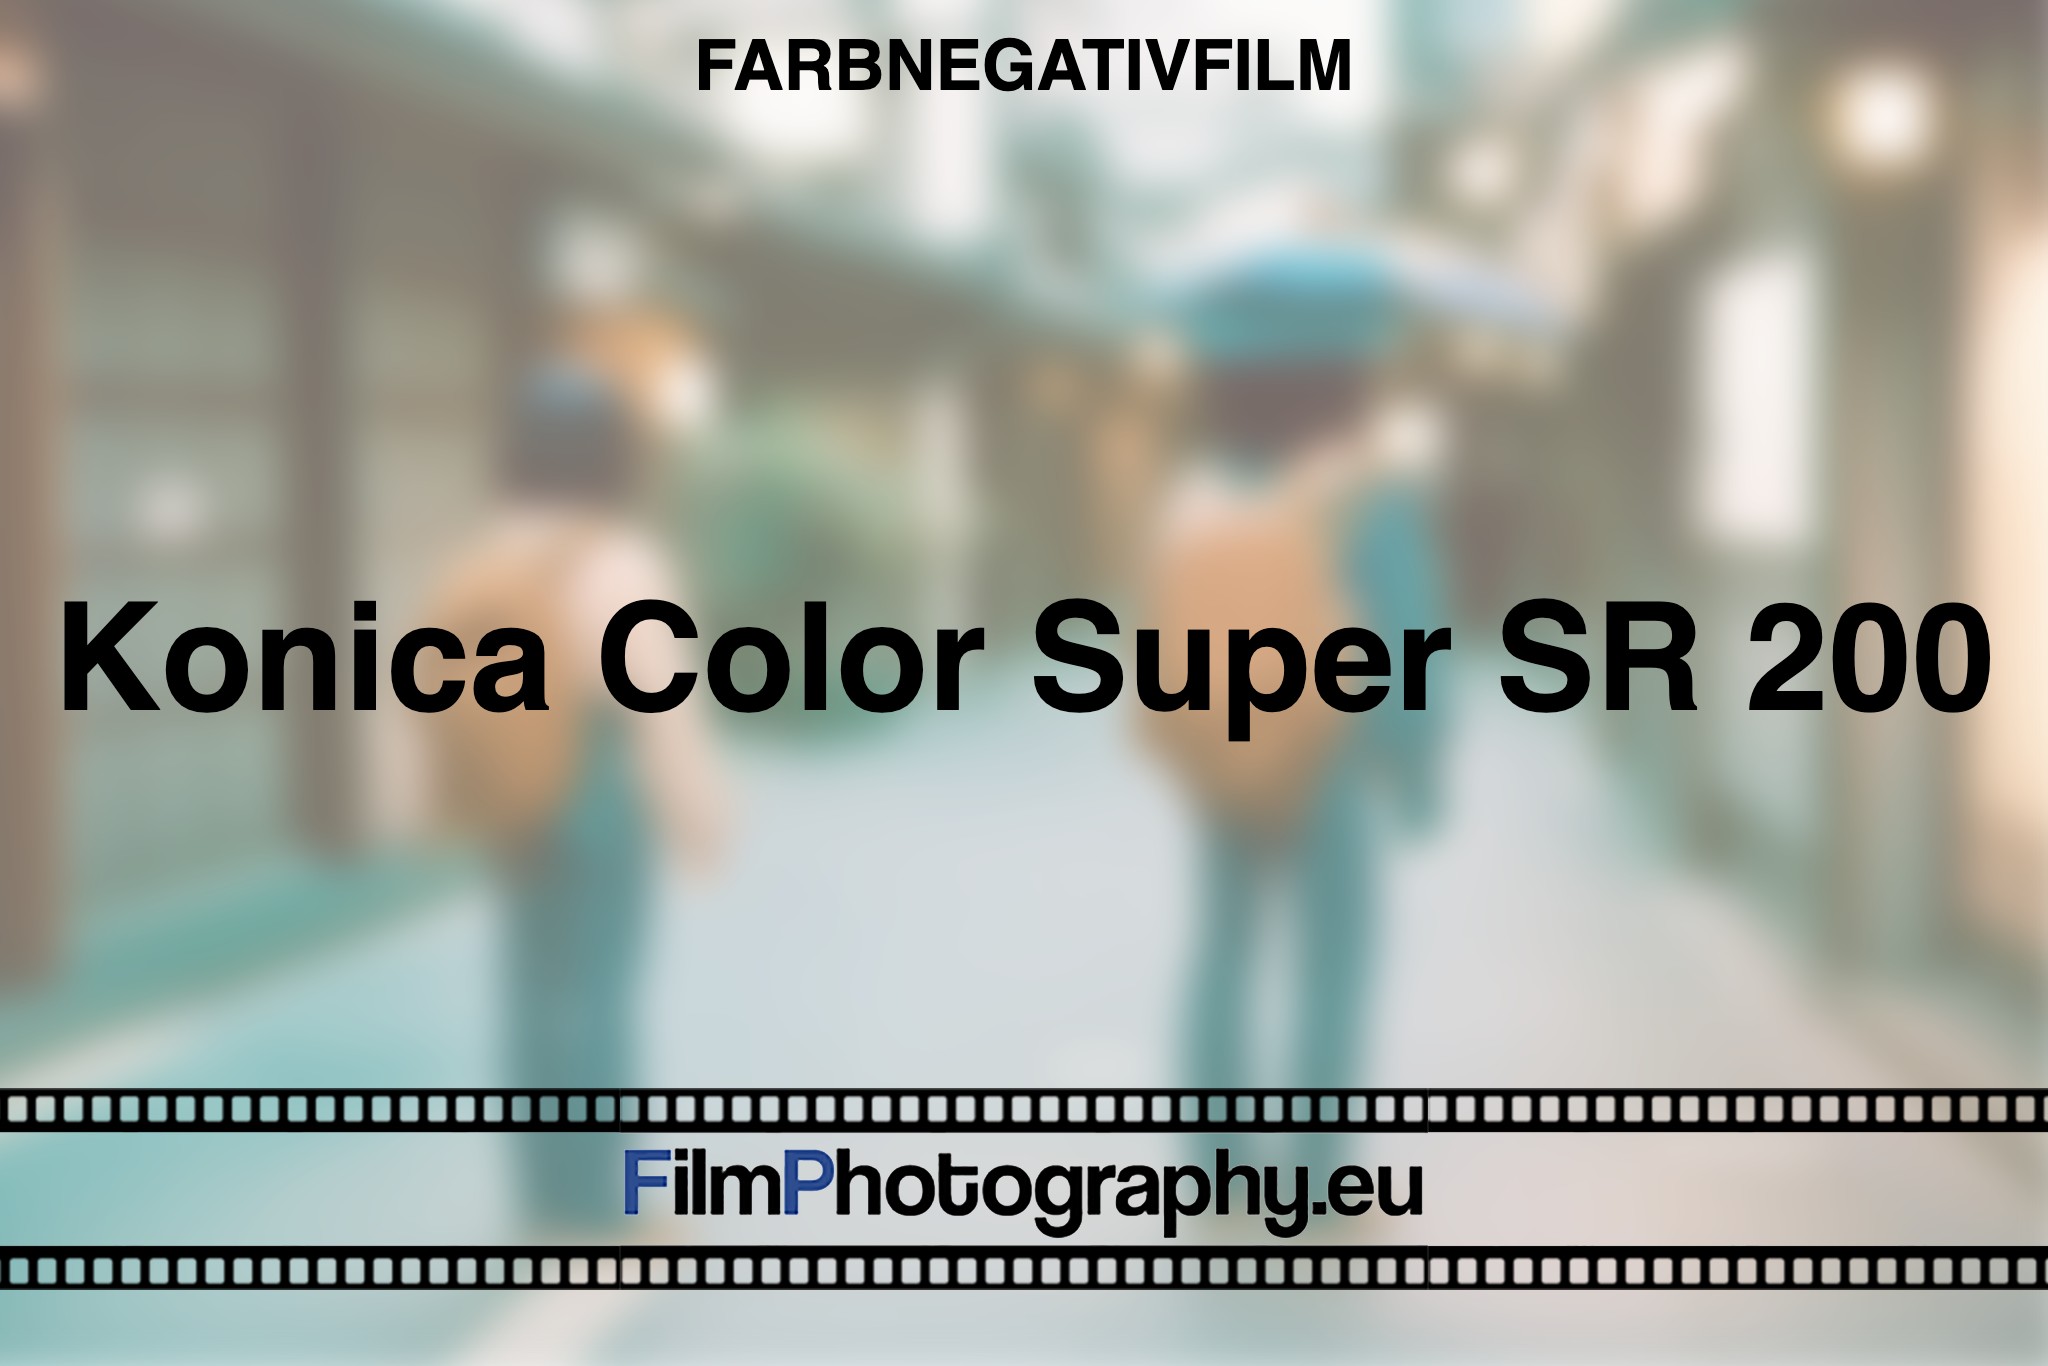 konica-color-super-sr-200-farbnegativfilm-bnv